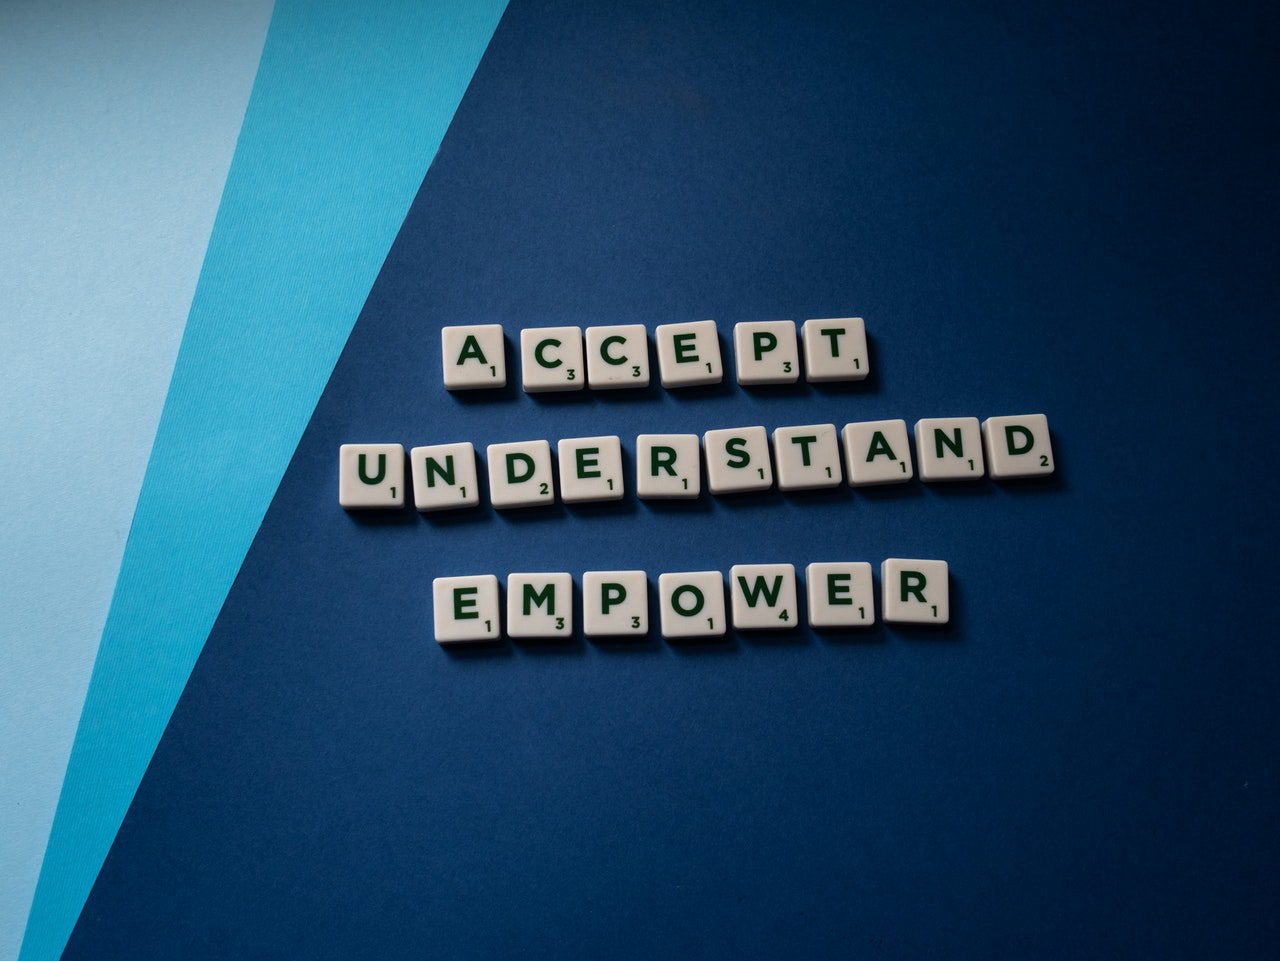 Alphabet tile spelling Accept, understand, empower on a blue background